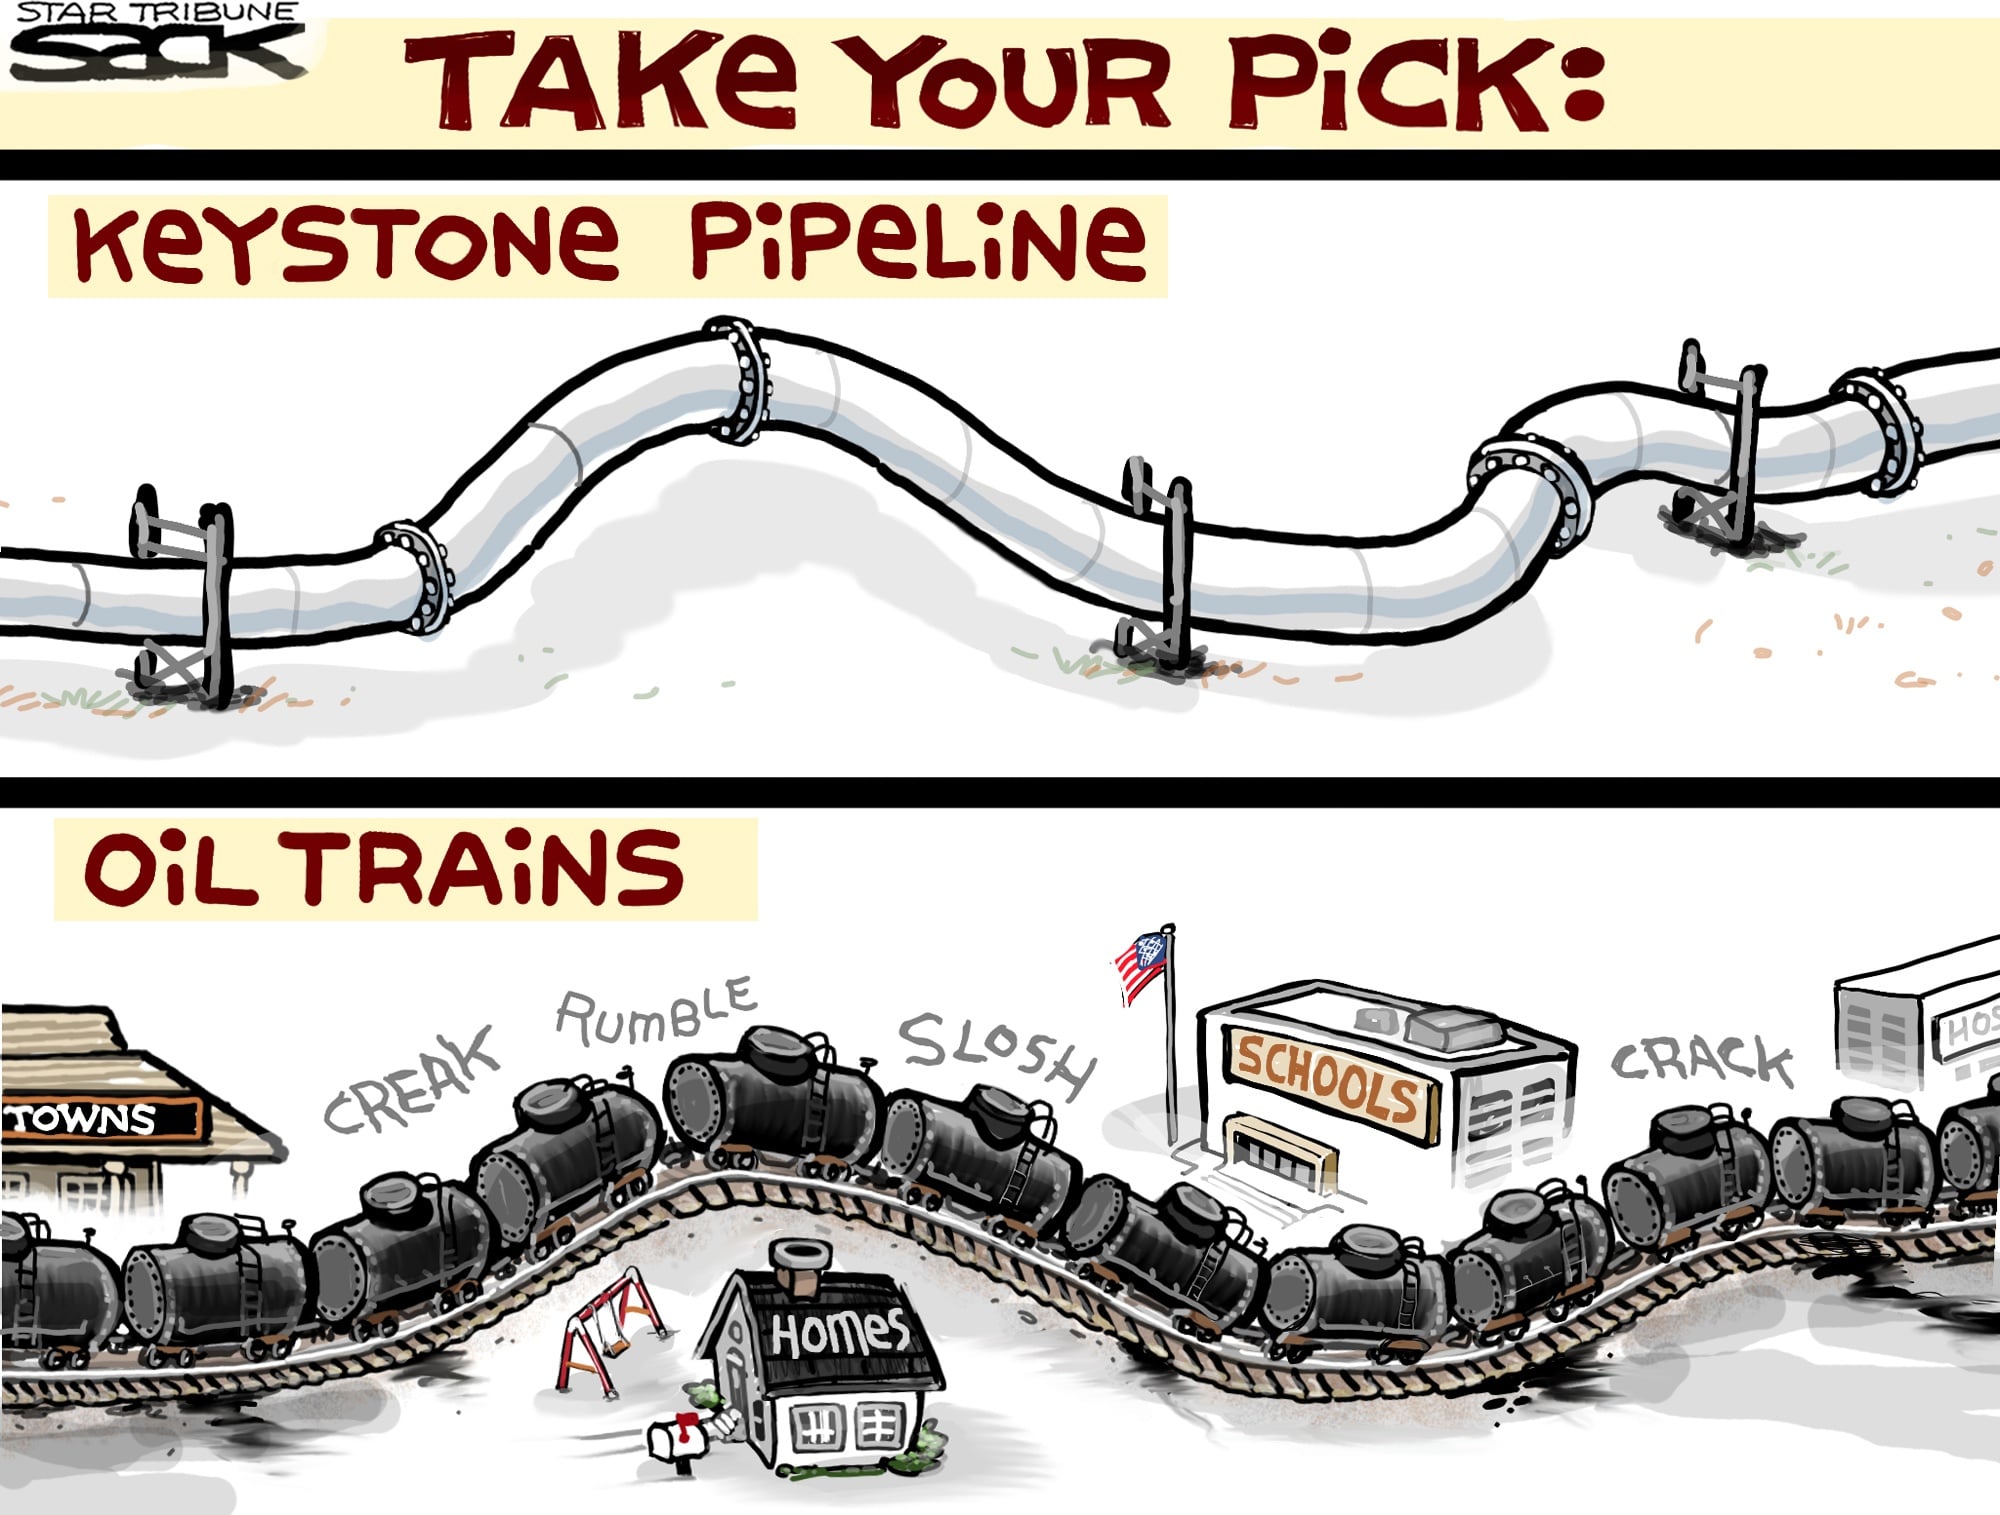 Biden blocking the pipeline won’t stop oil transportation